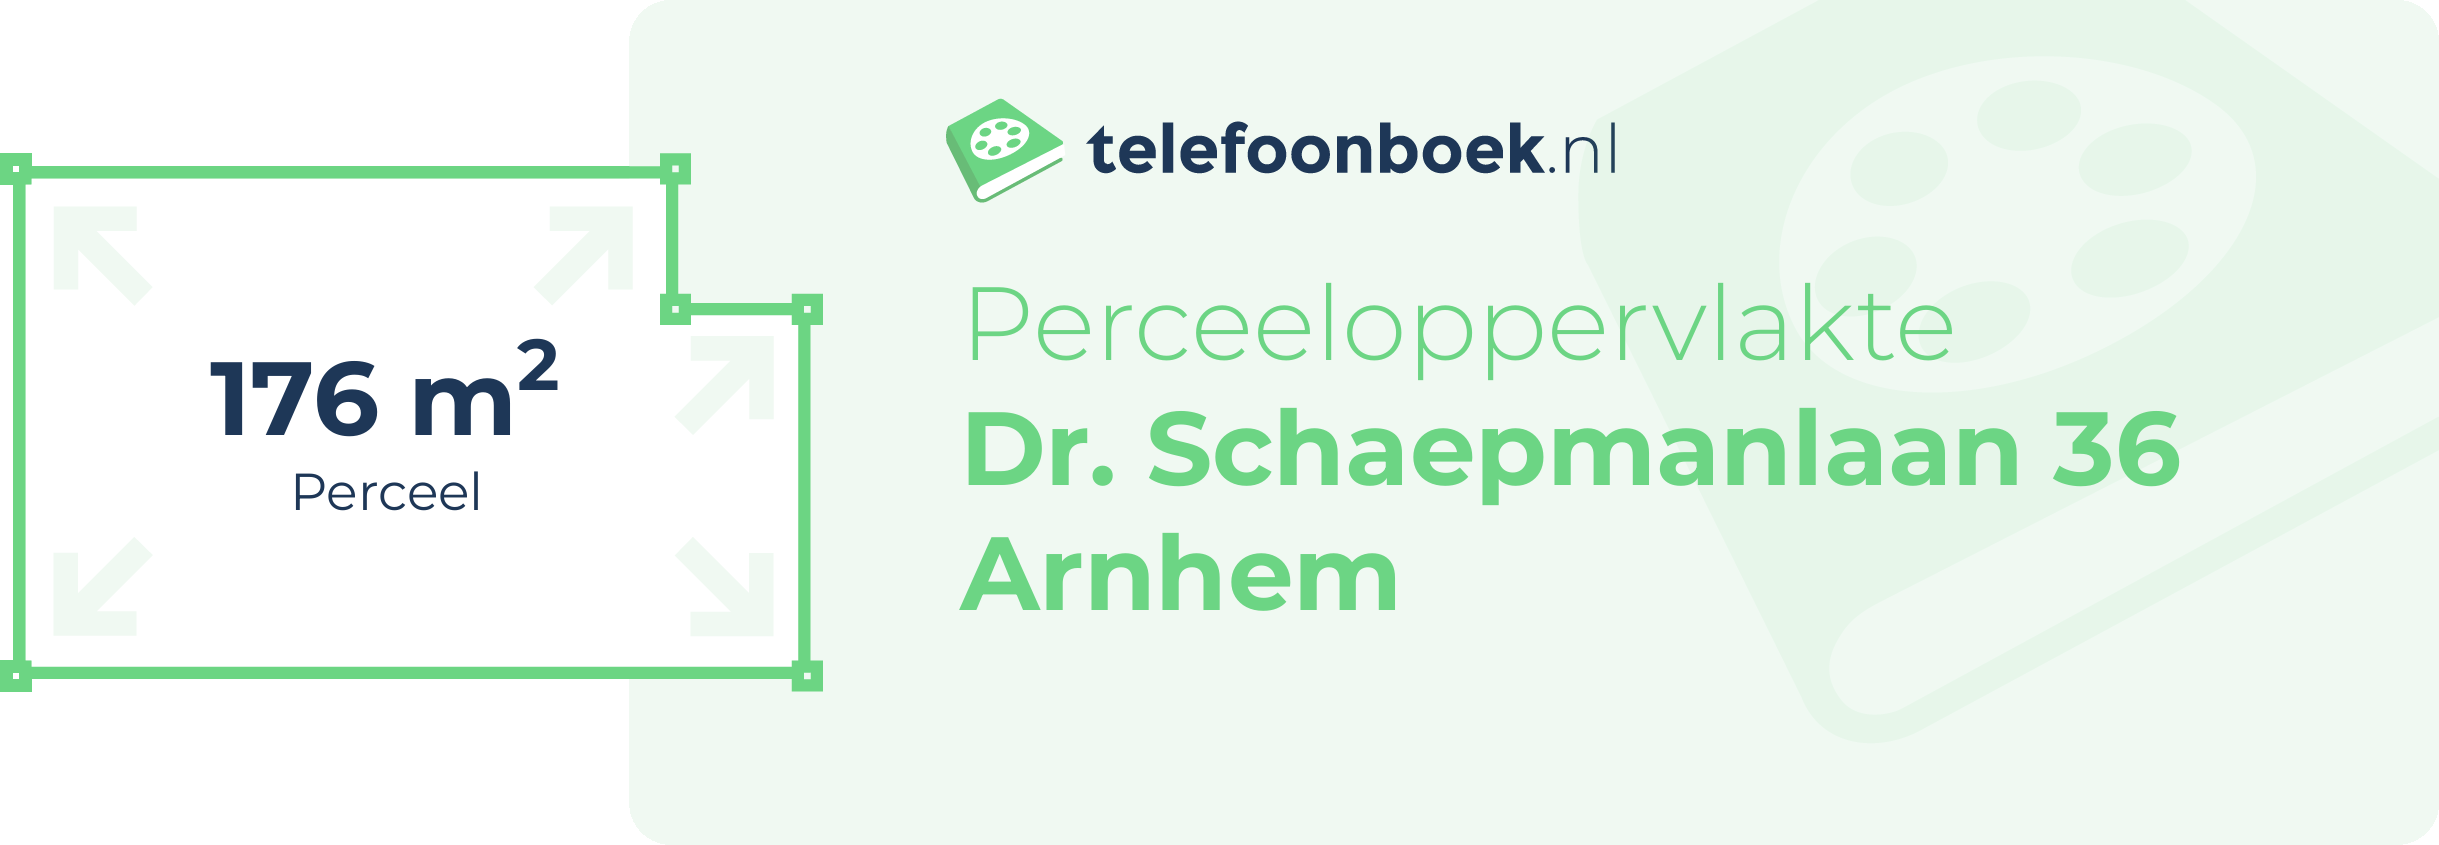 Perceeloppervlakte Dr. Schaepmanlaan 36 Arnhem